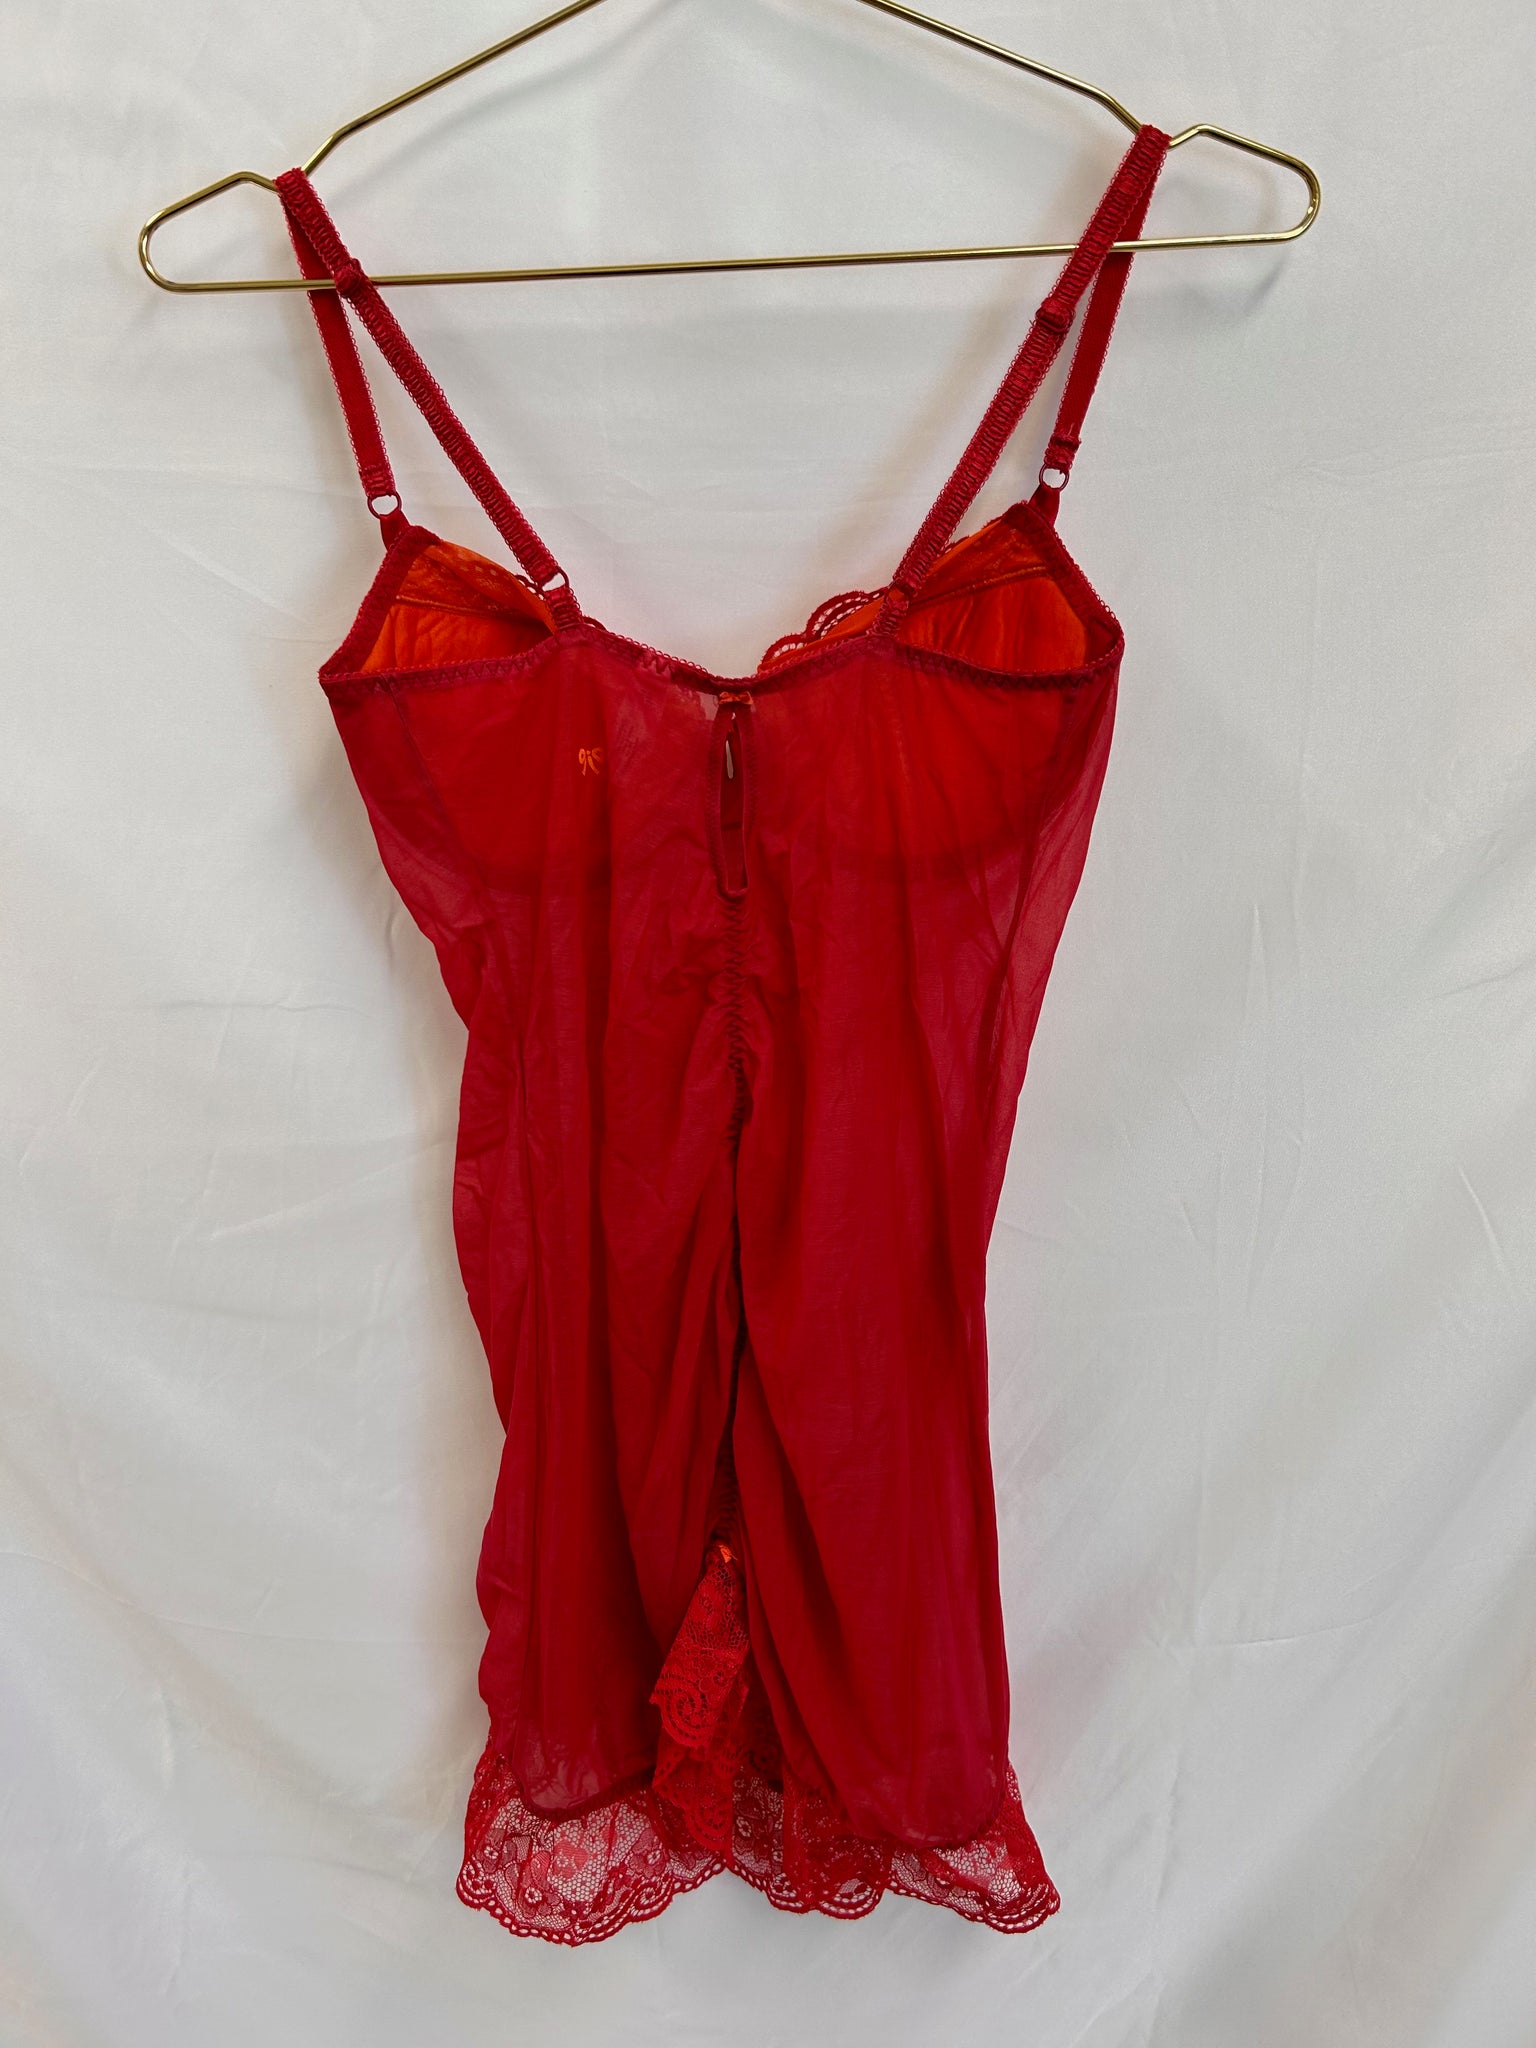 VINTAGE: Victoria’s Secret Hot Red Top/Mini Dress